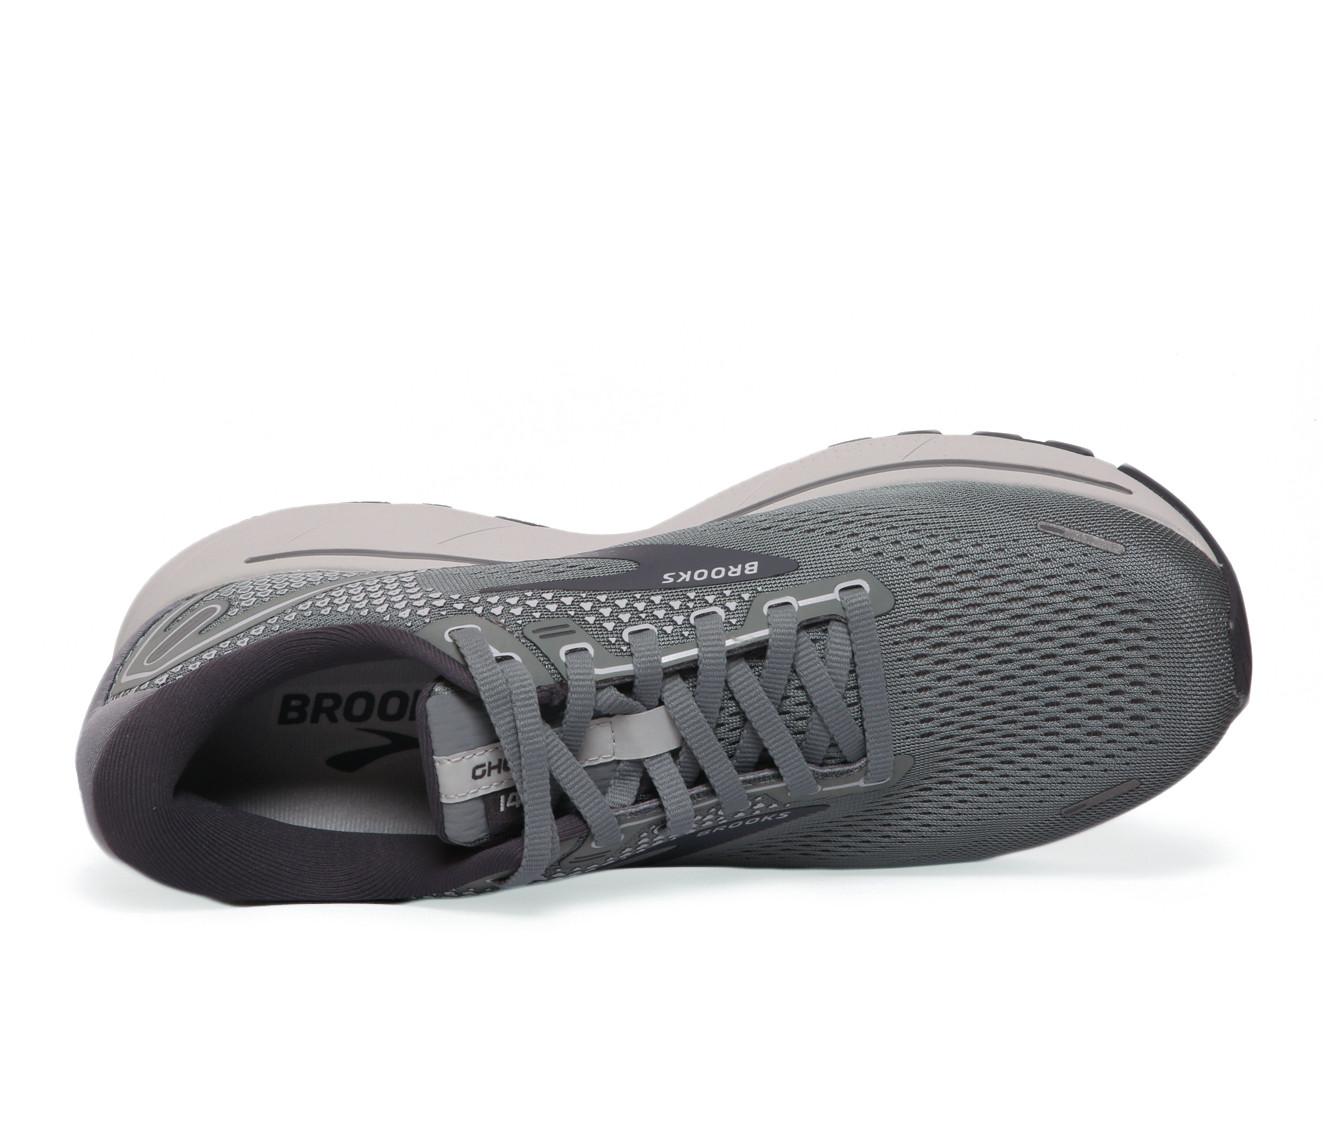 Brooks Ghost 14 Grey Women's Running Shoe Grey